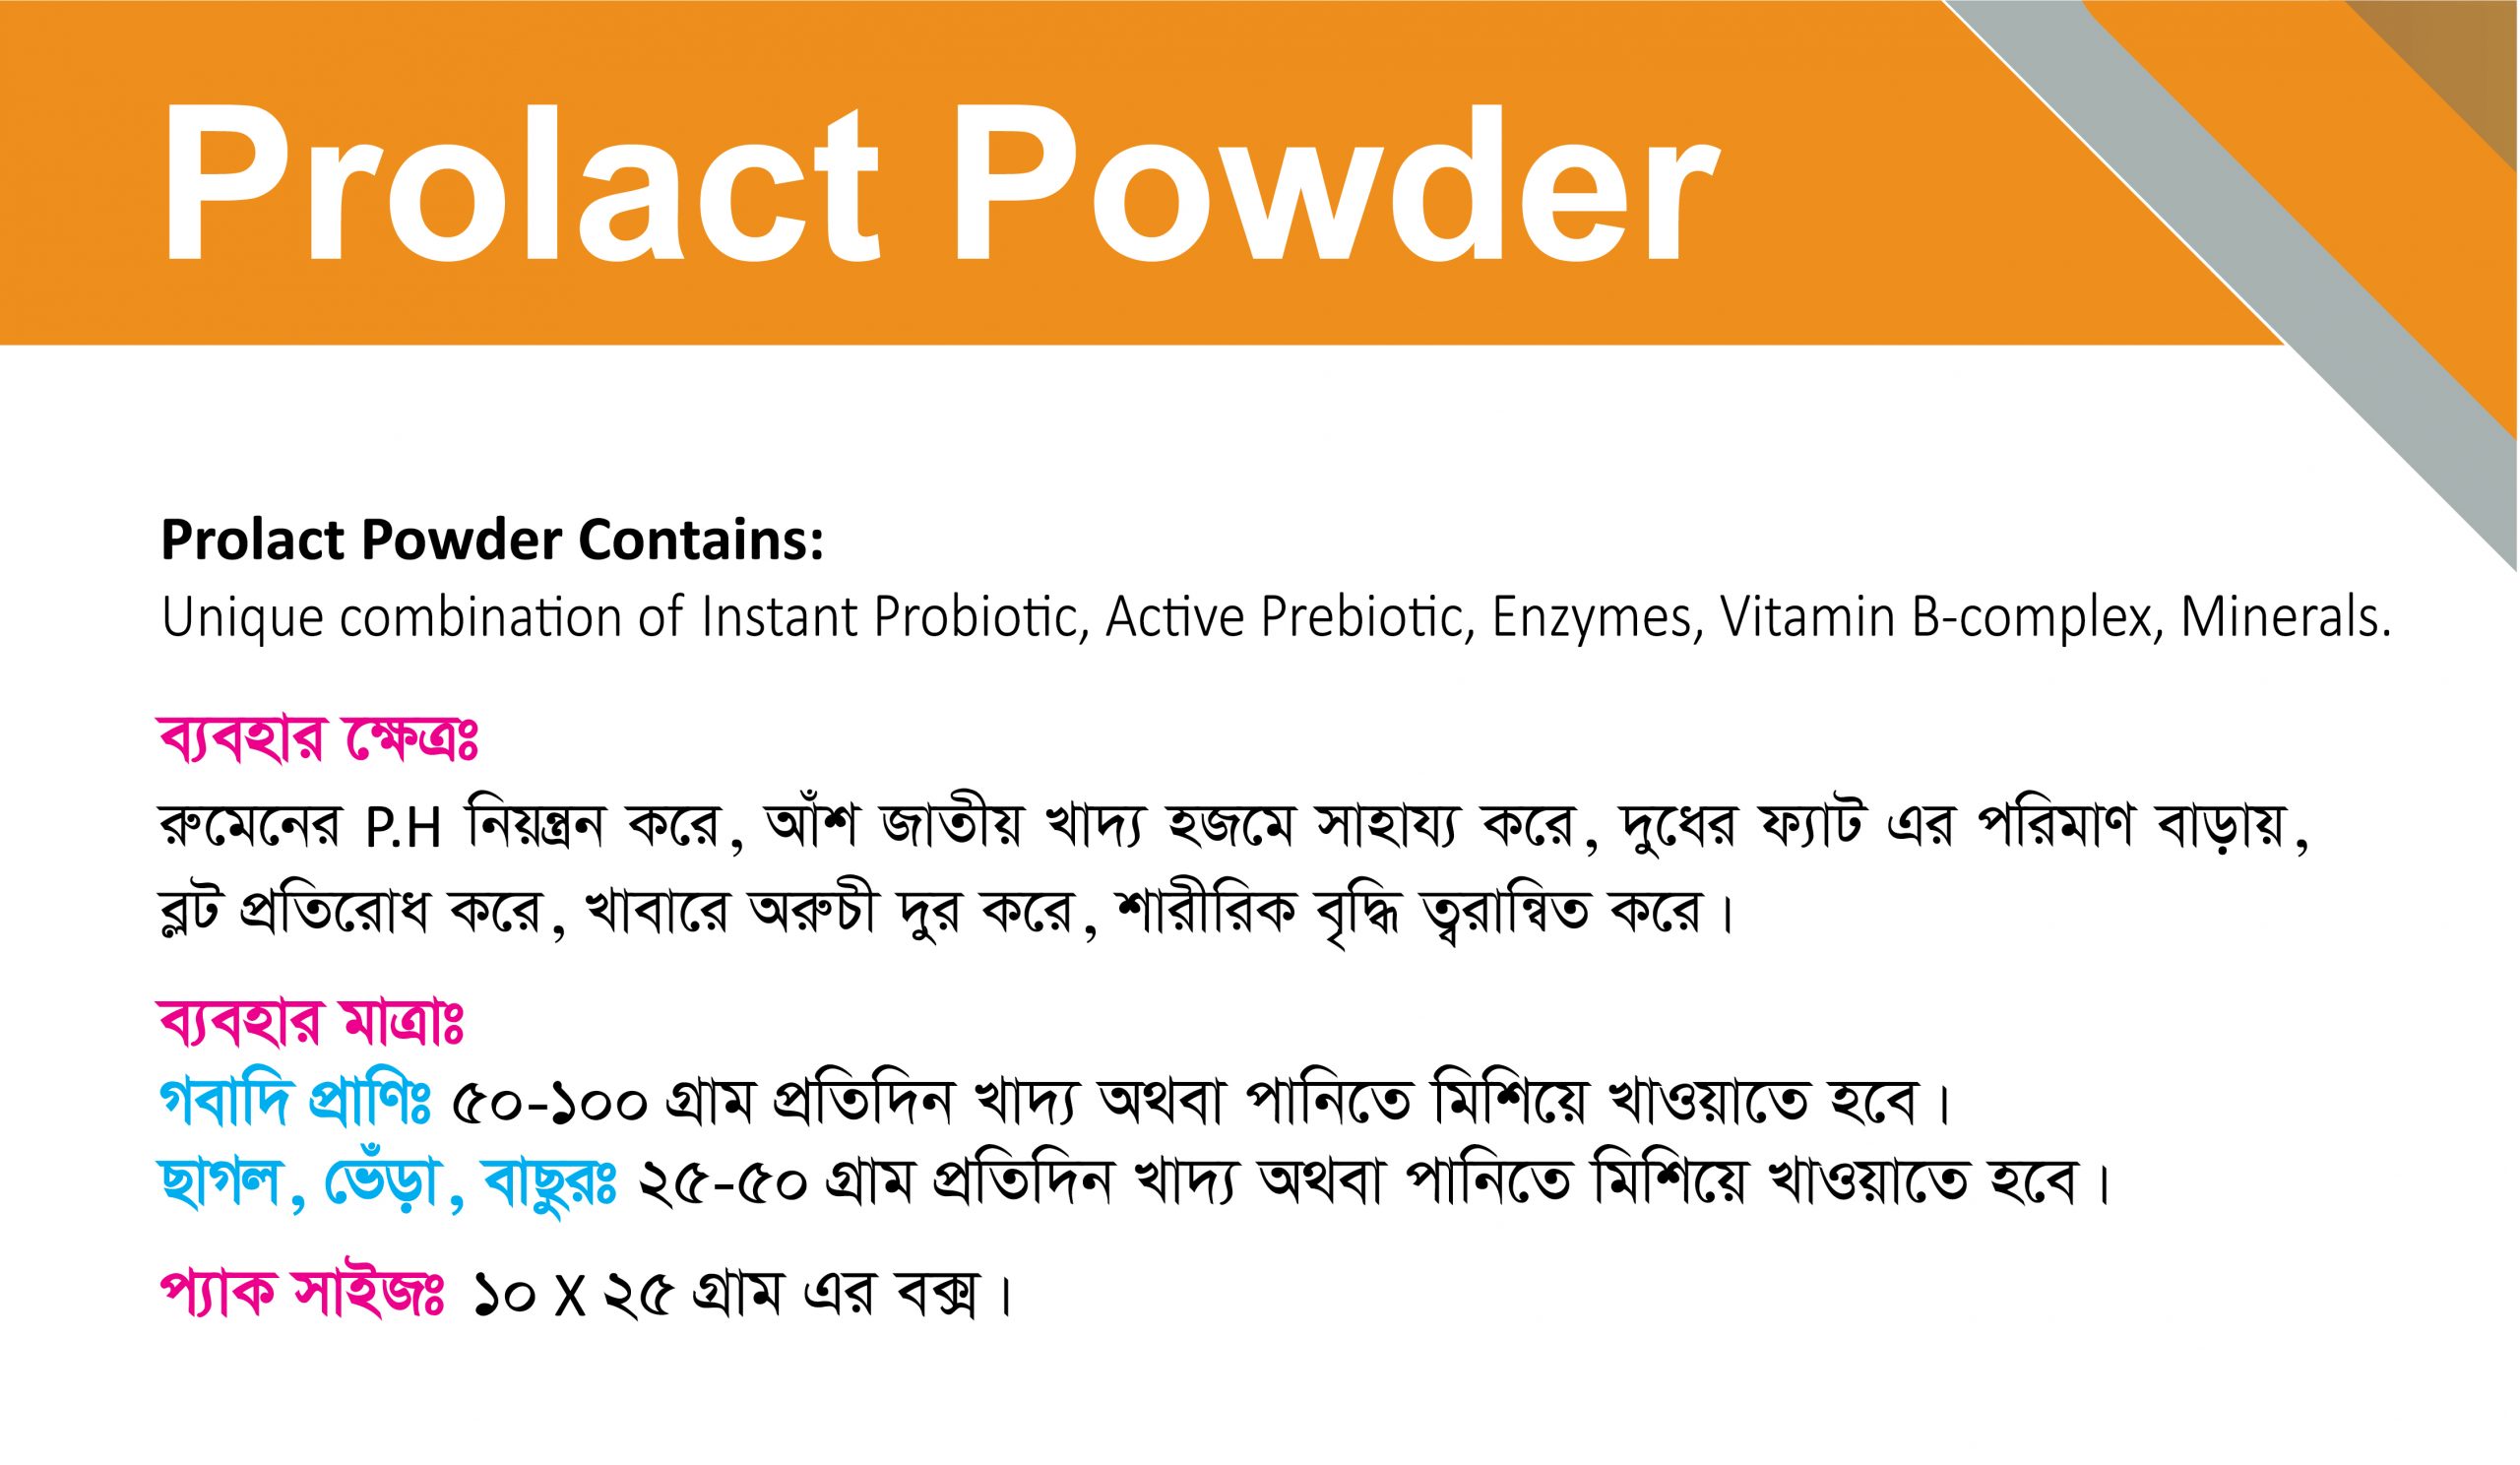 Prolact Powder Description scaled